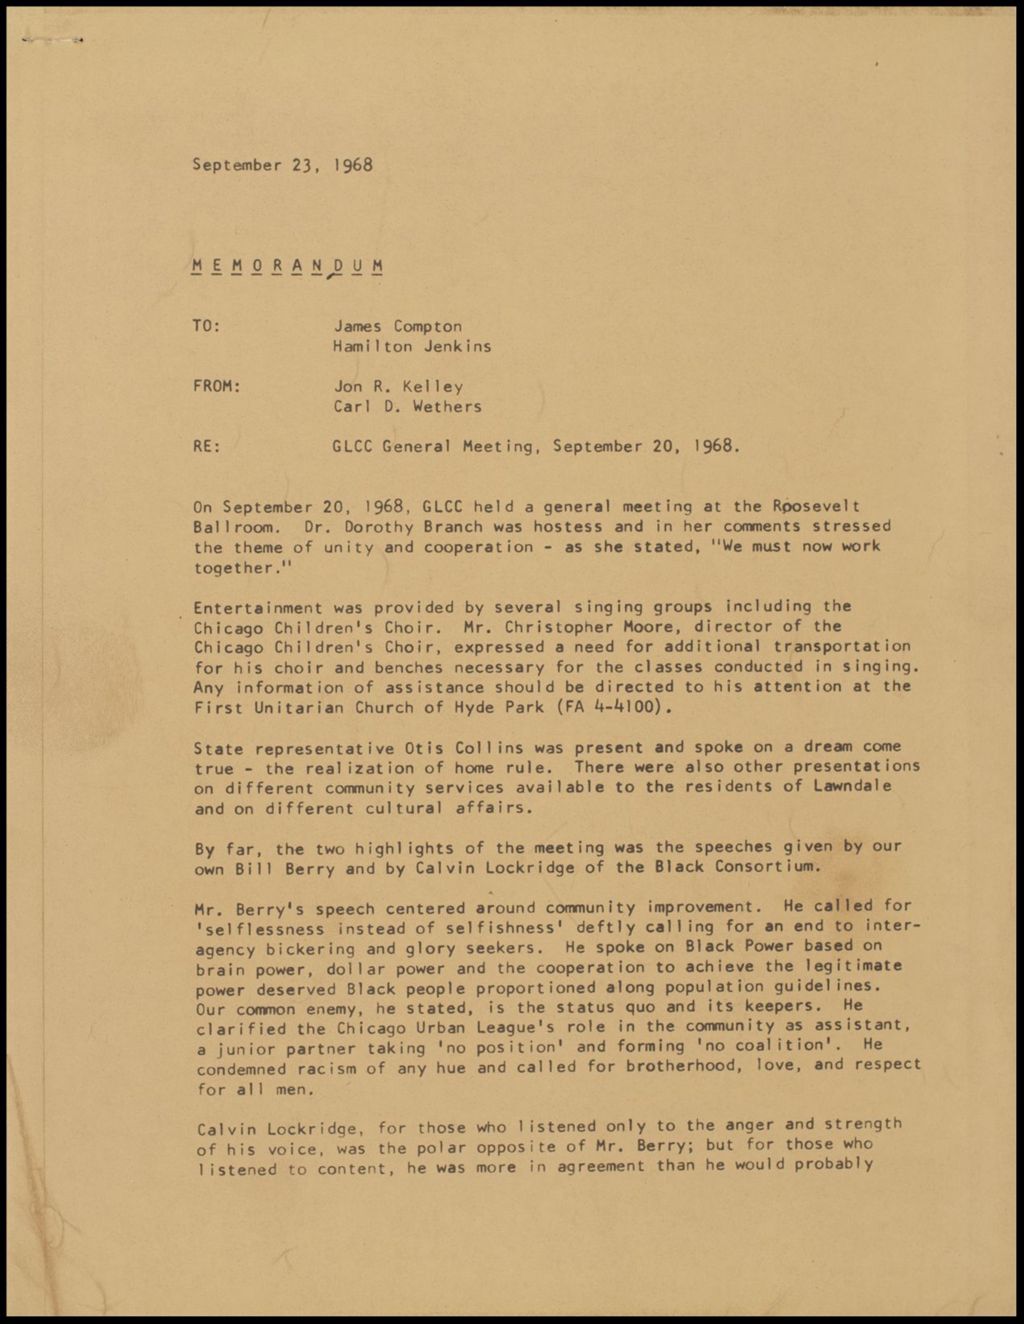 Miniature of GLCC general meeting, 1968 (Folder I-2978)